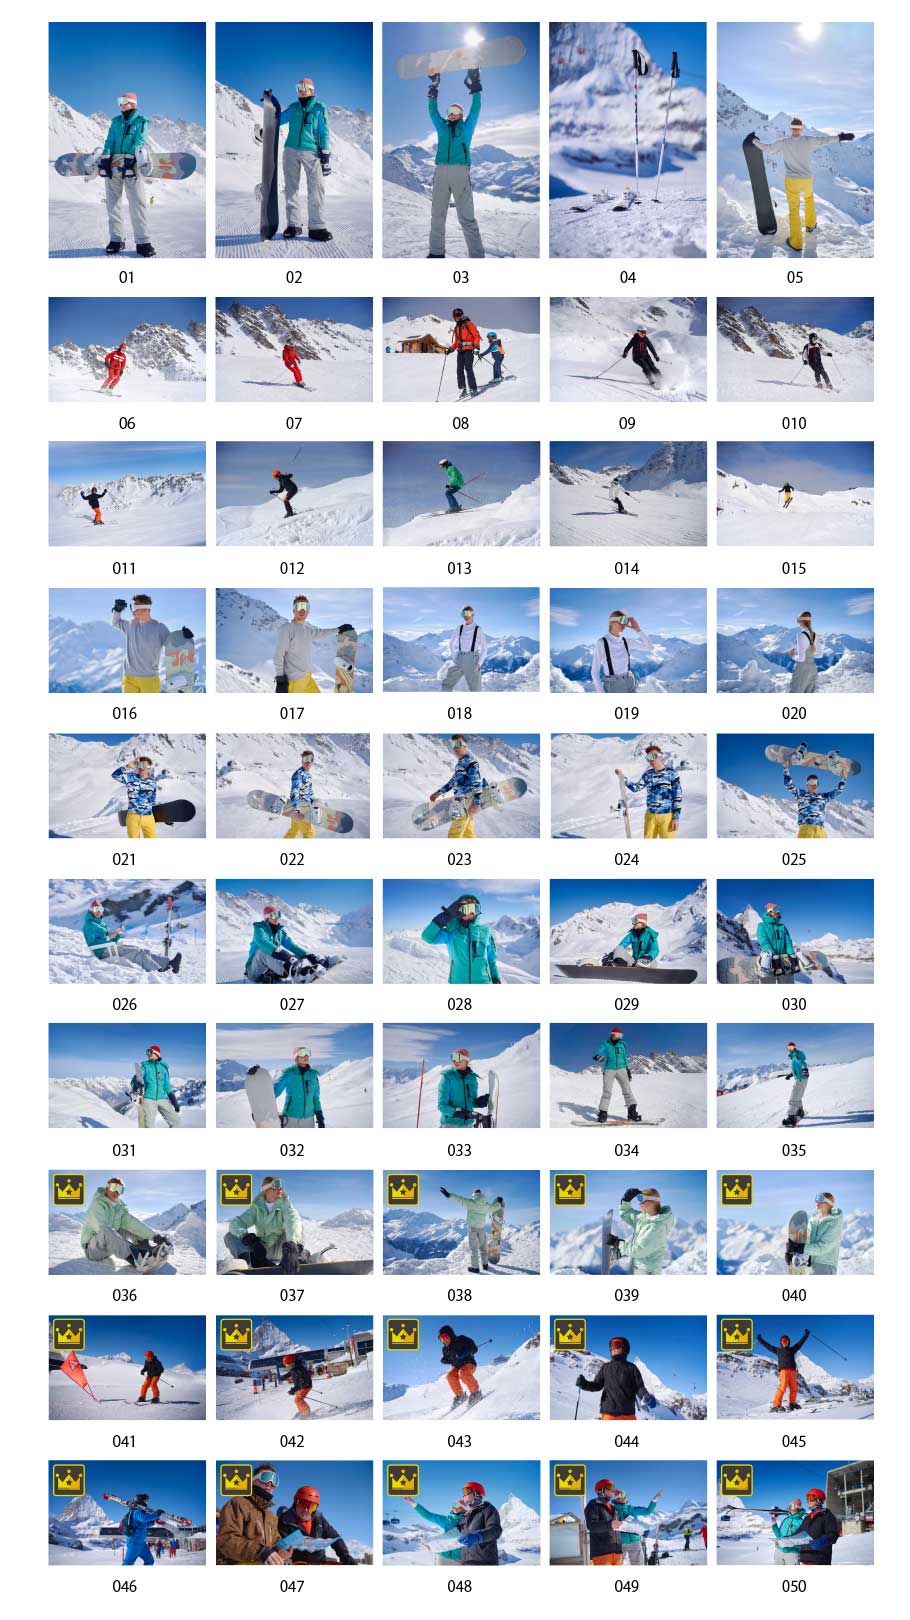 Winter sports photos